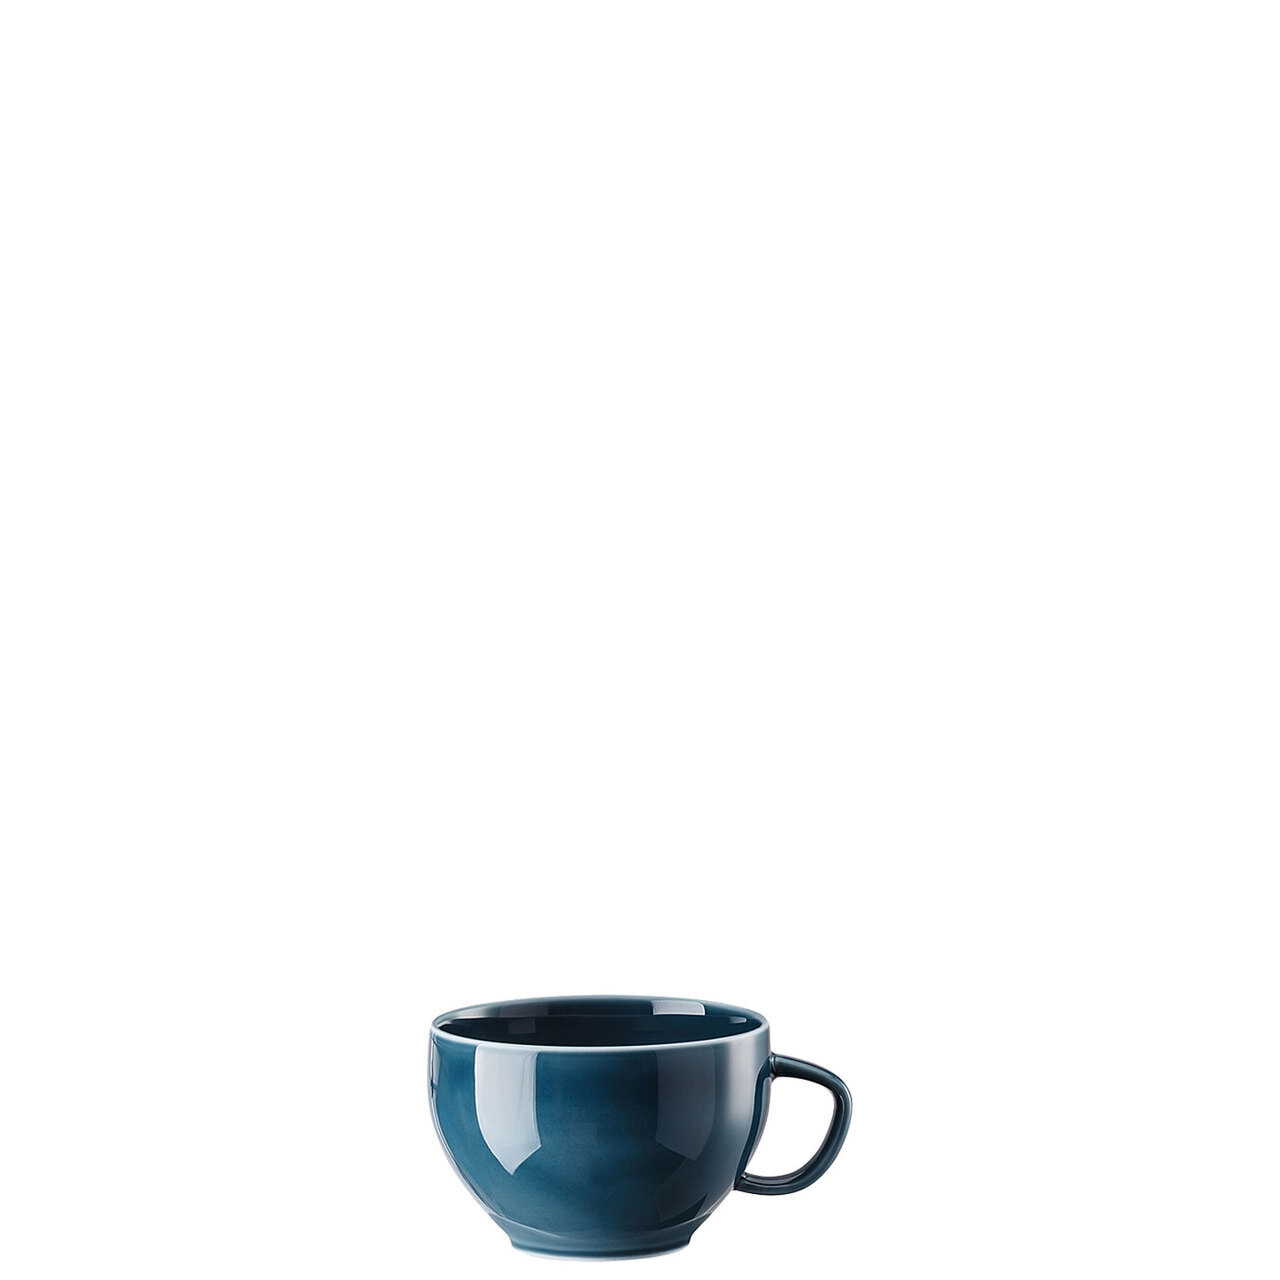 Rosenthal Junto Ocean Blue Tea Cup 8 oz